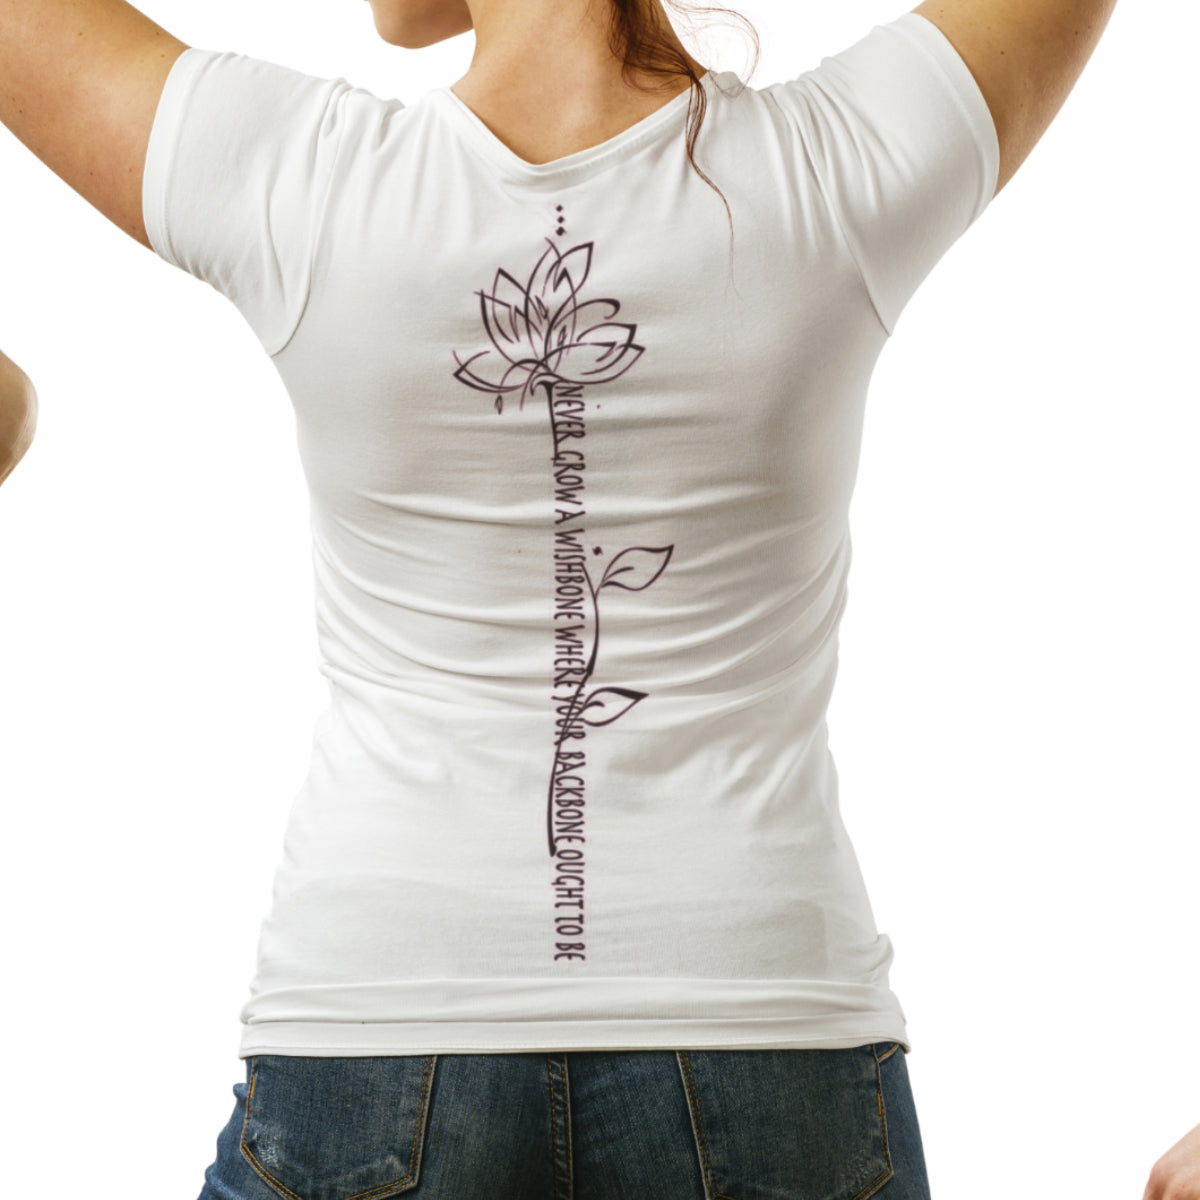 Backbone - V neck Women's cut t-shirt